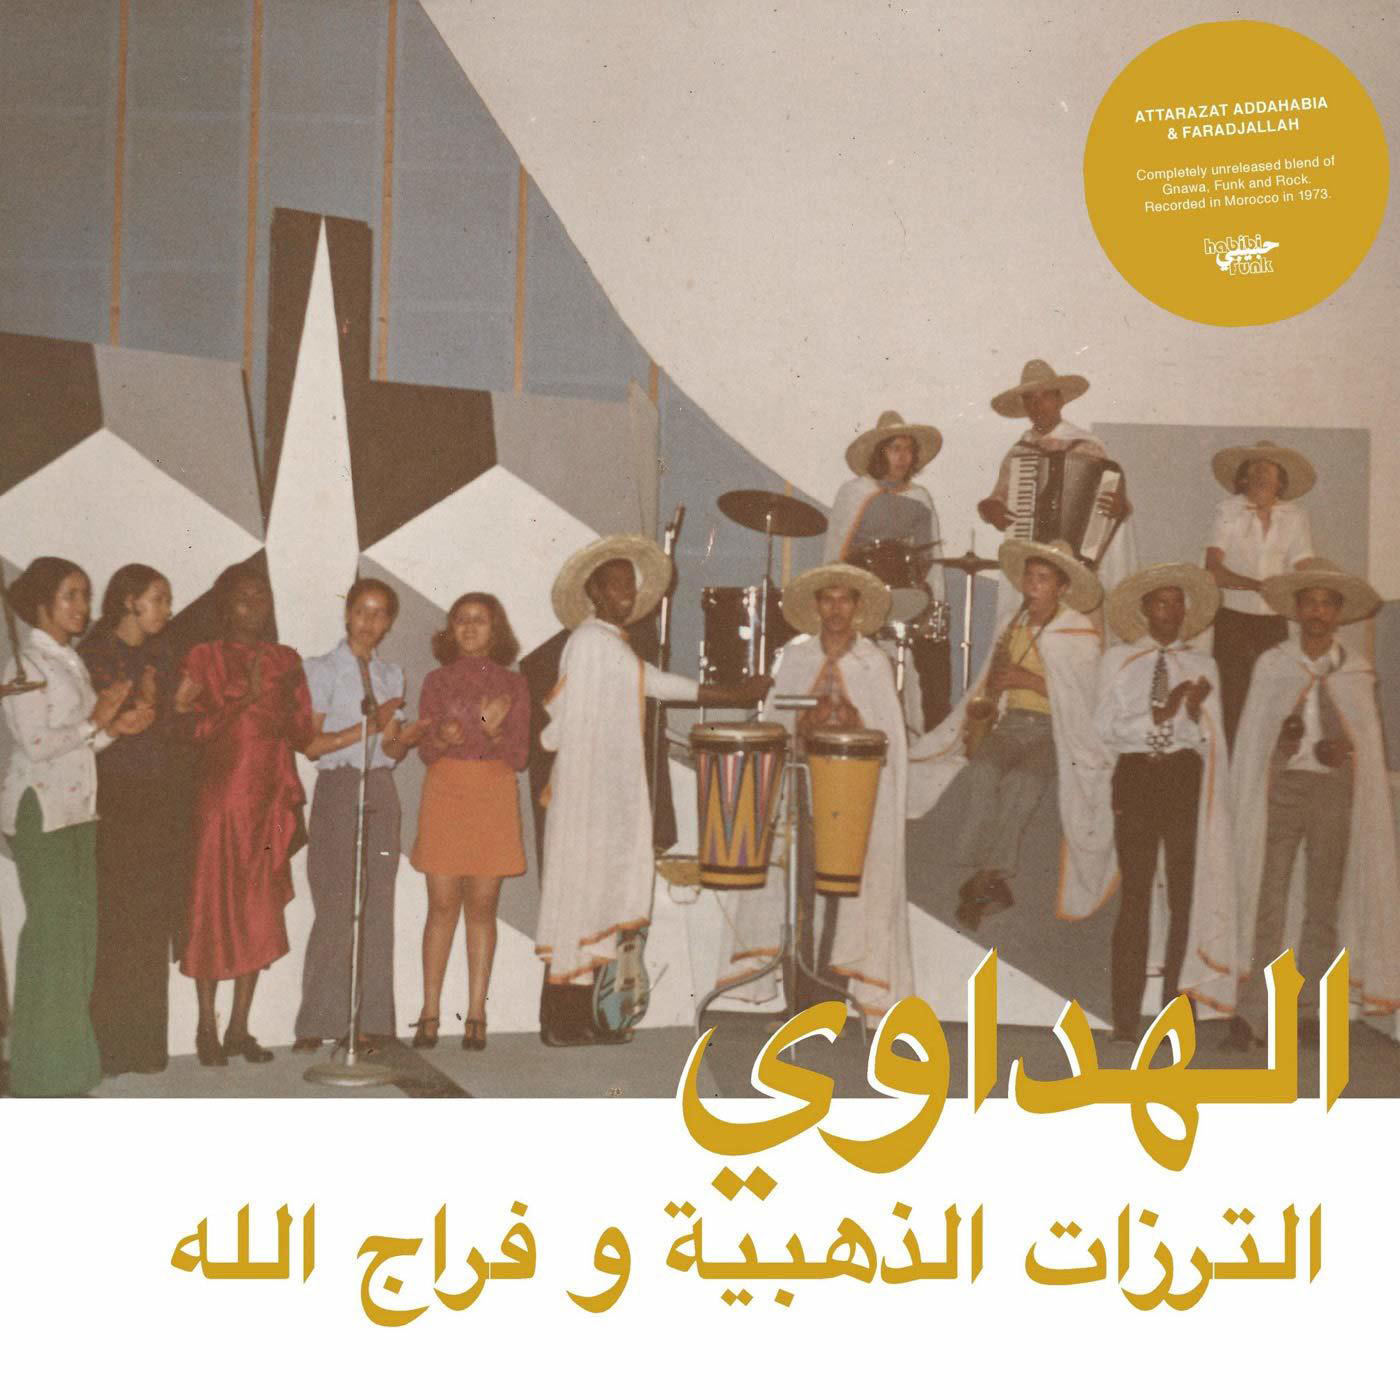 & (Vinyl) Faradjallah - AL HADAOUI Addahabia (+MP3) Attarazat -